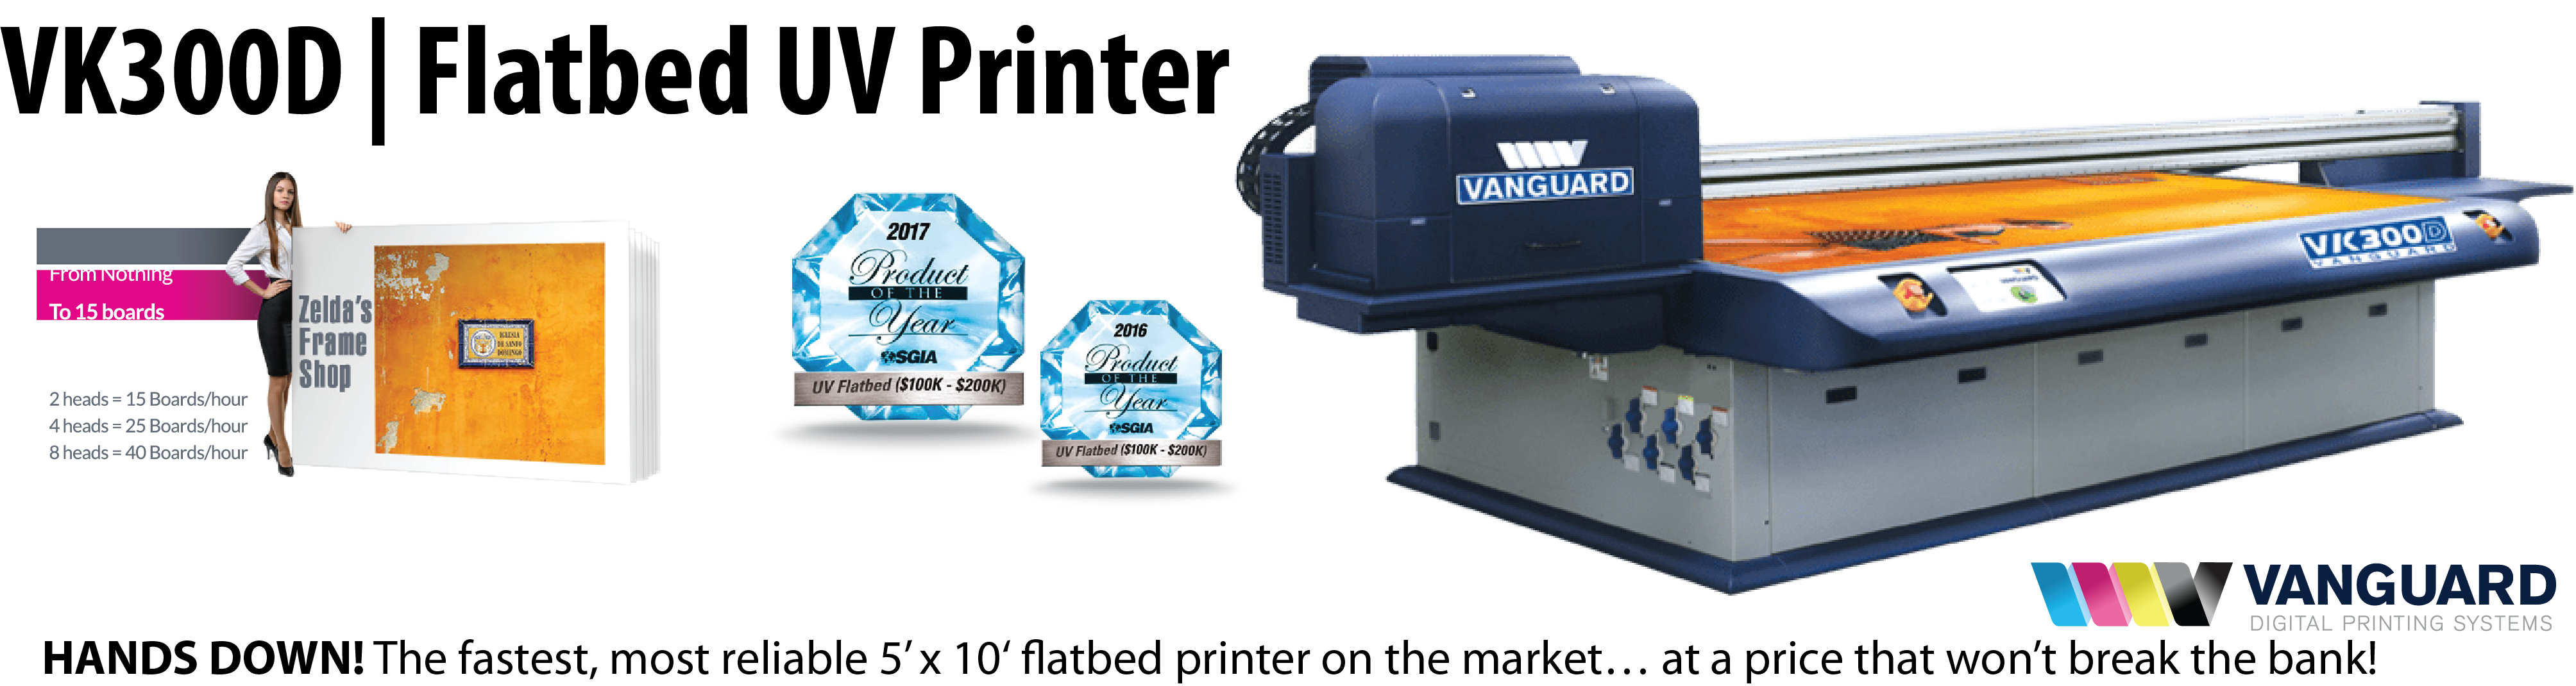 Vanguard Digital Printing Systems VK300D Series 5 X 10 Flatbed UV Printer Printers Hardware